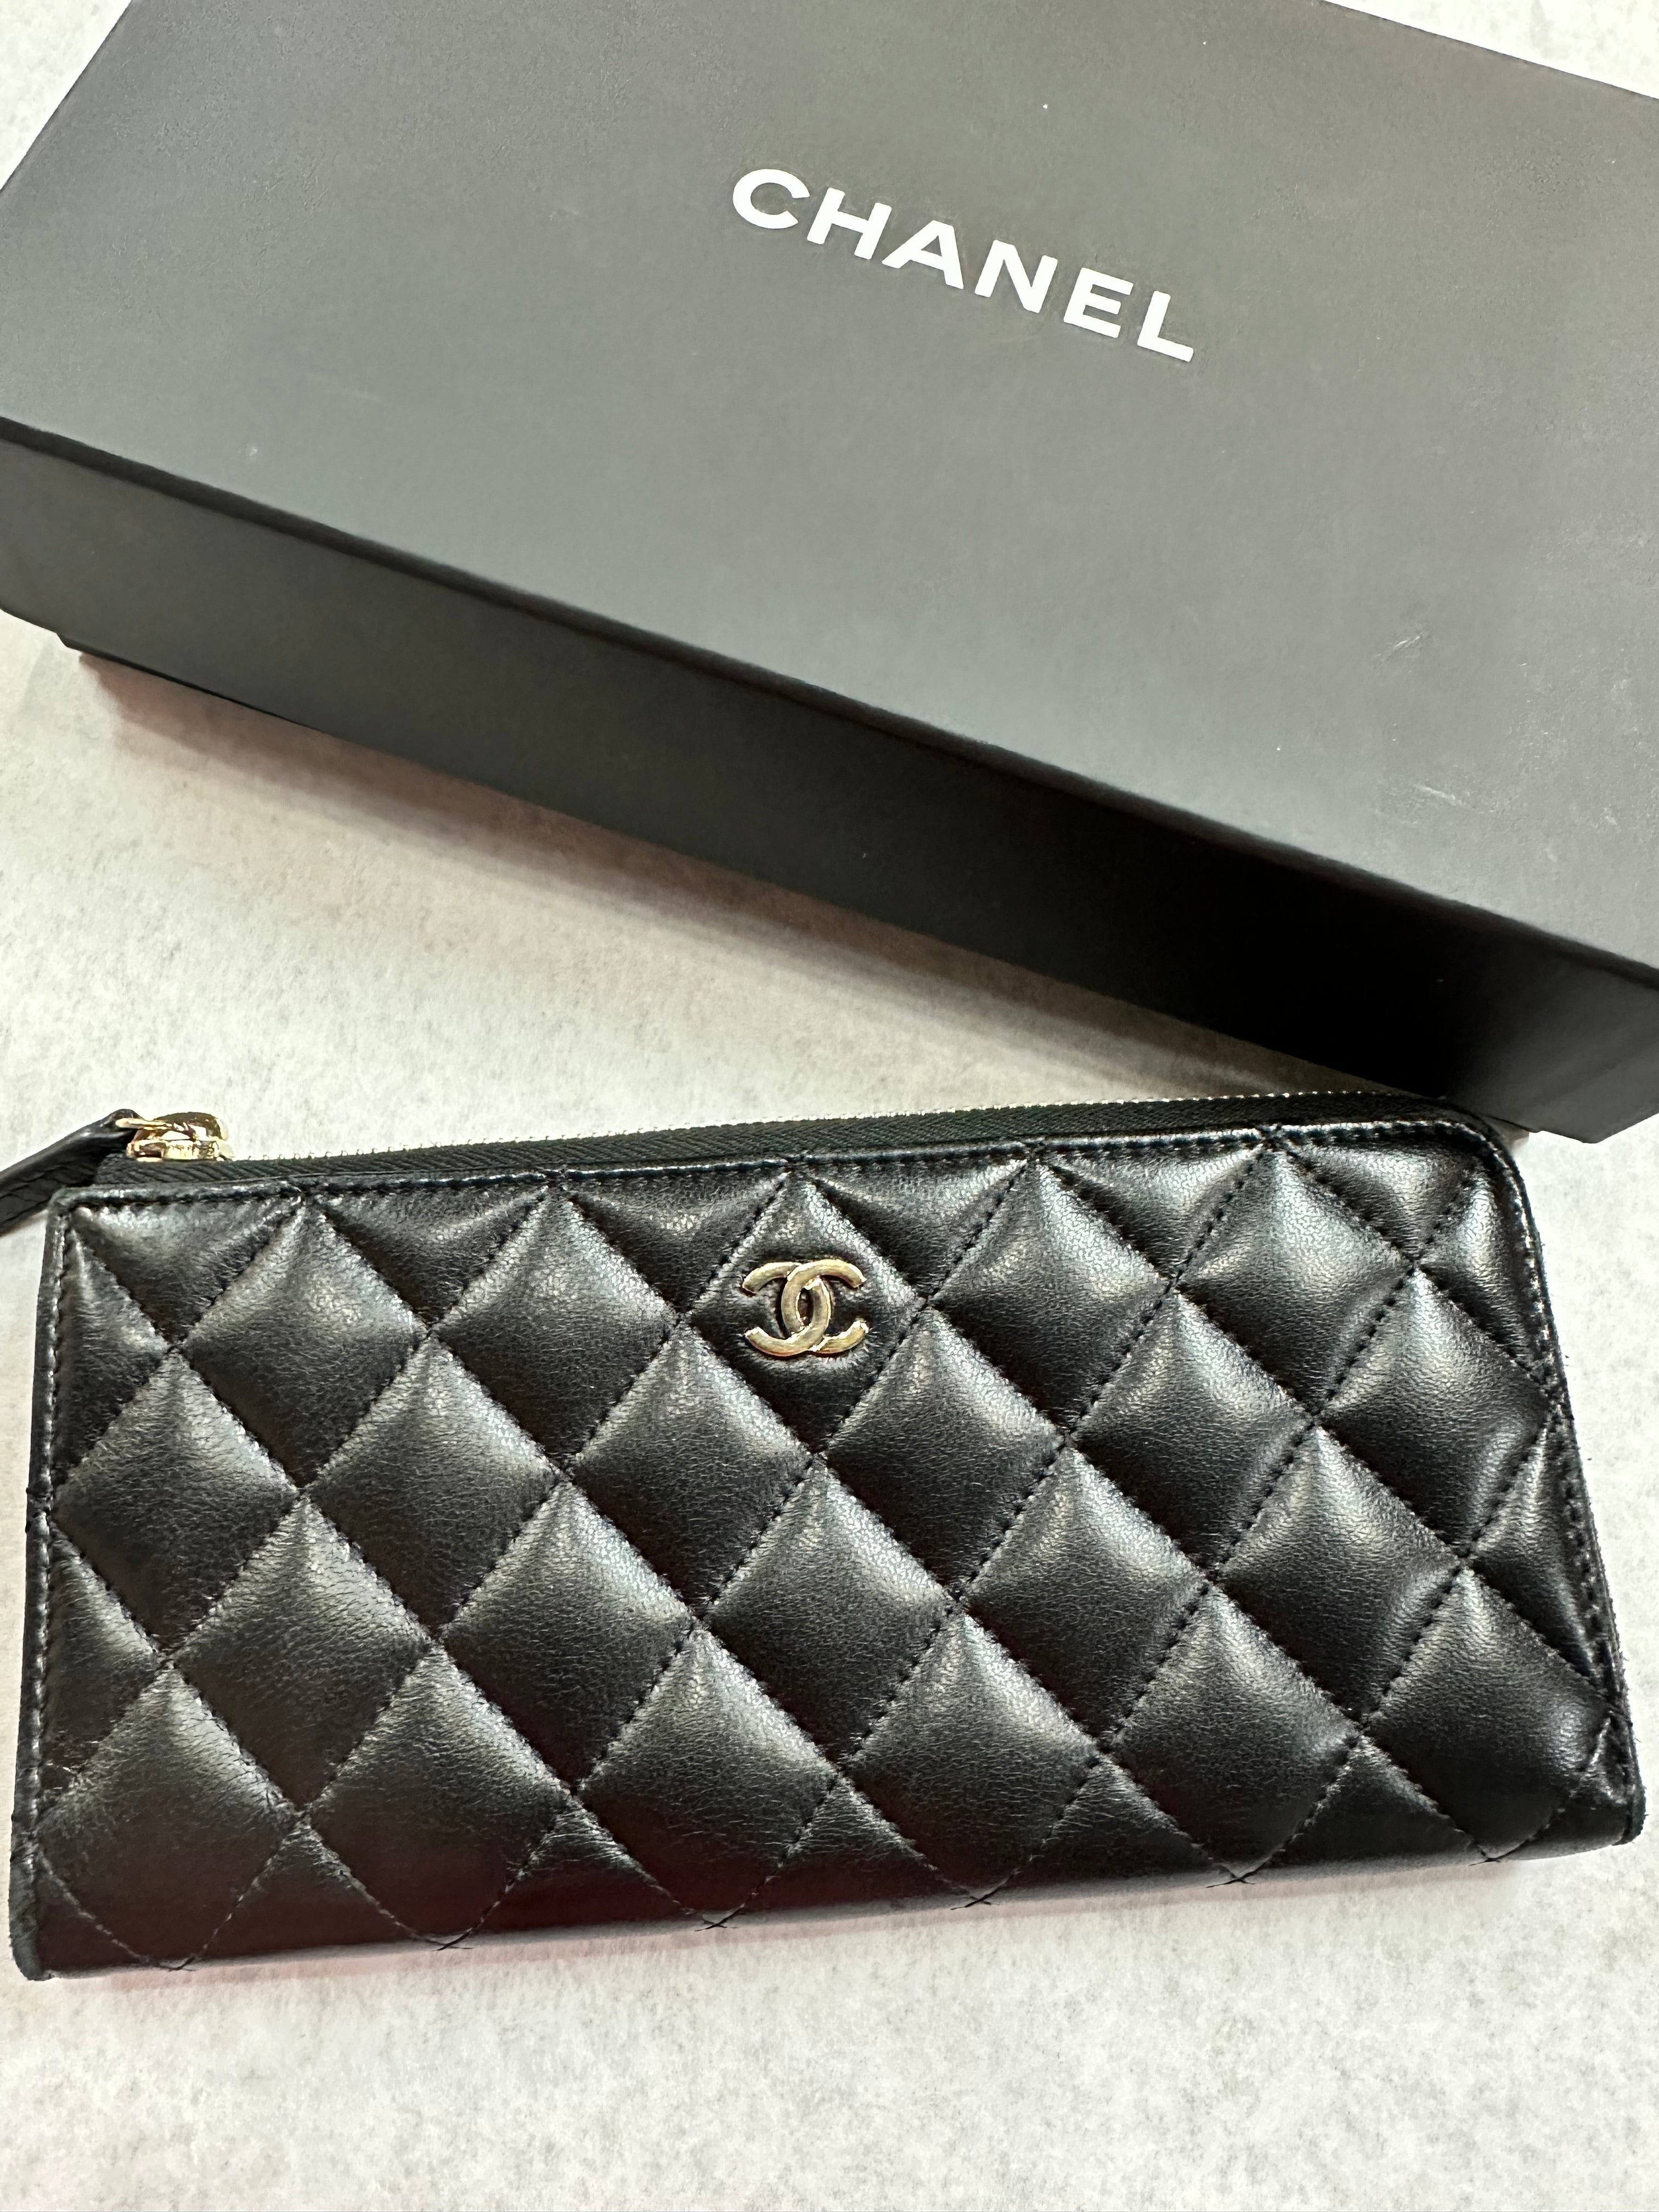 70s Chanel Bag - 8 For Sale on 1stDibs